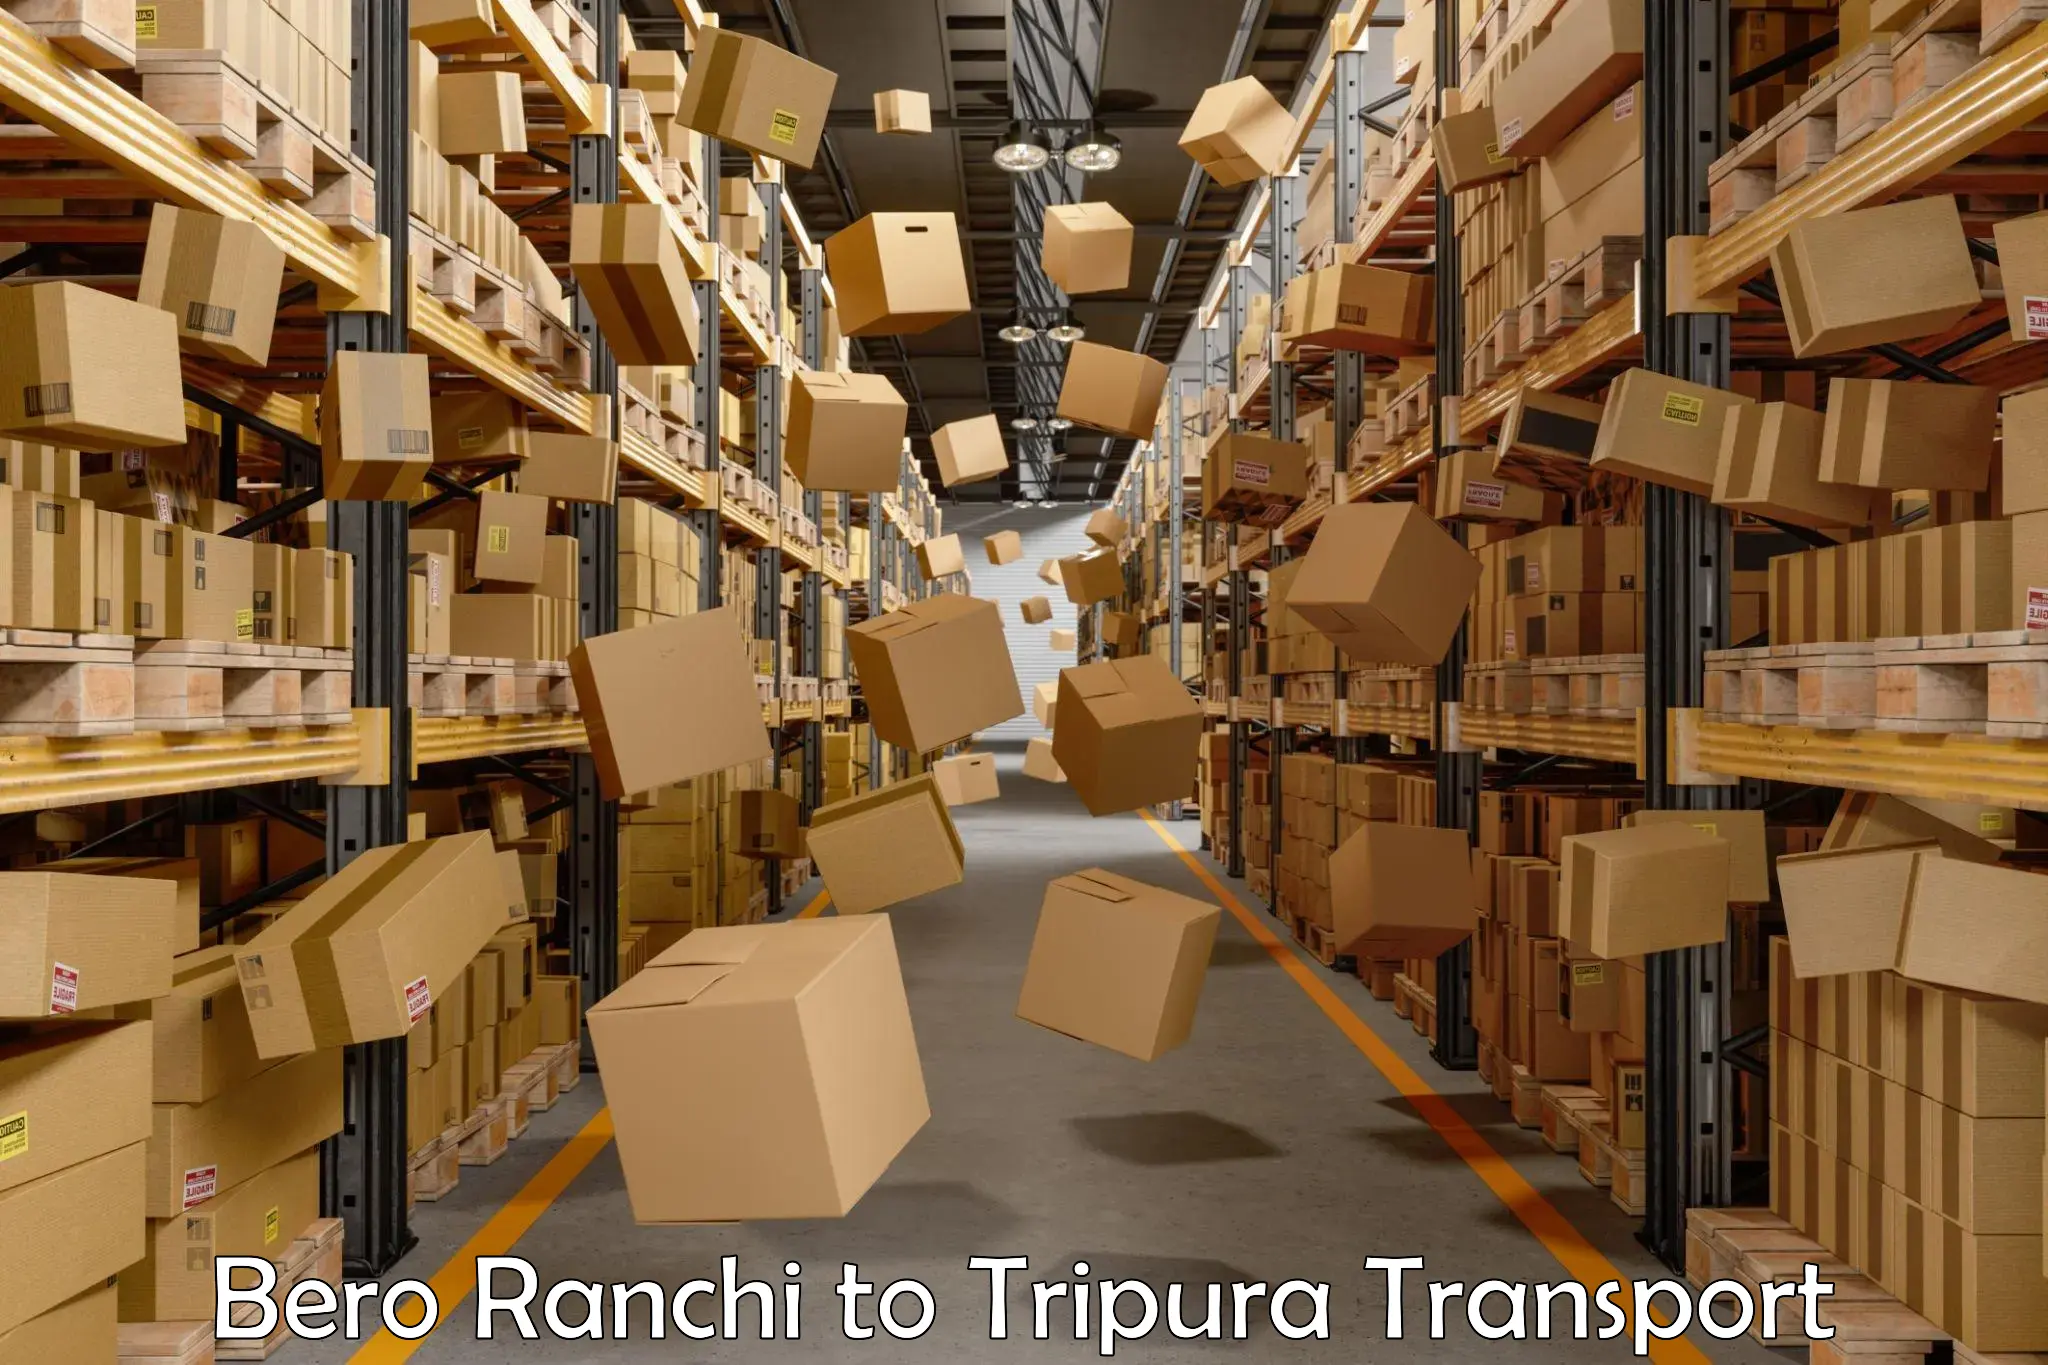 Part load transport service in India Bero Ranchi to Udaipur Tripura